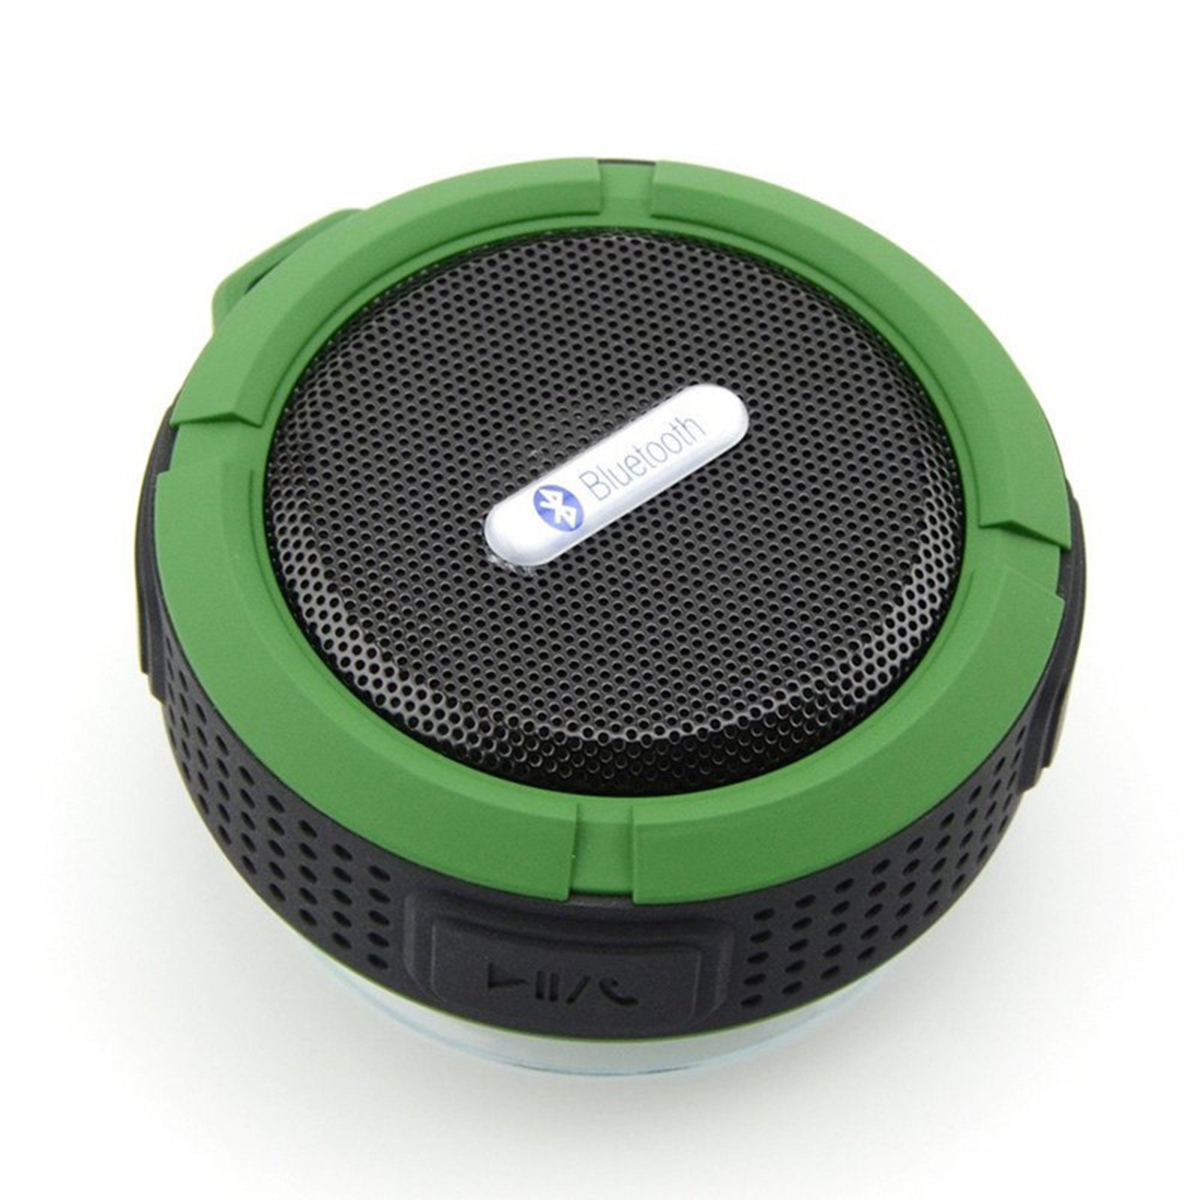 C6 Bluetooth Speaker Outdoor Waterproof Sound Box Wireless Sound Box Support Insert TF-card - image 1 of 11